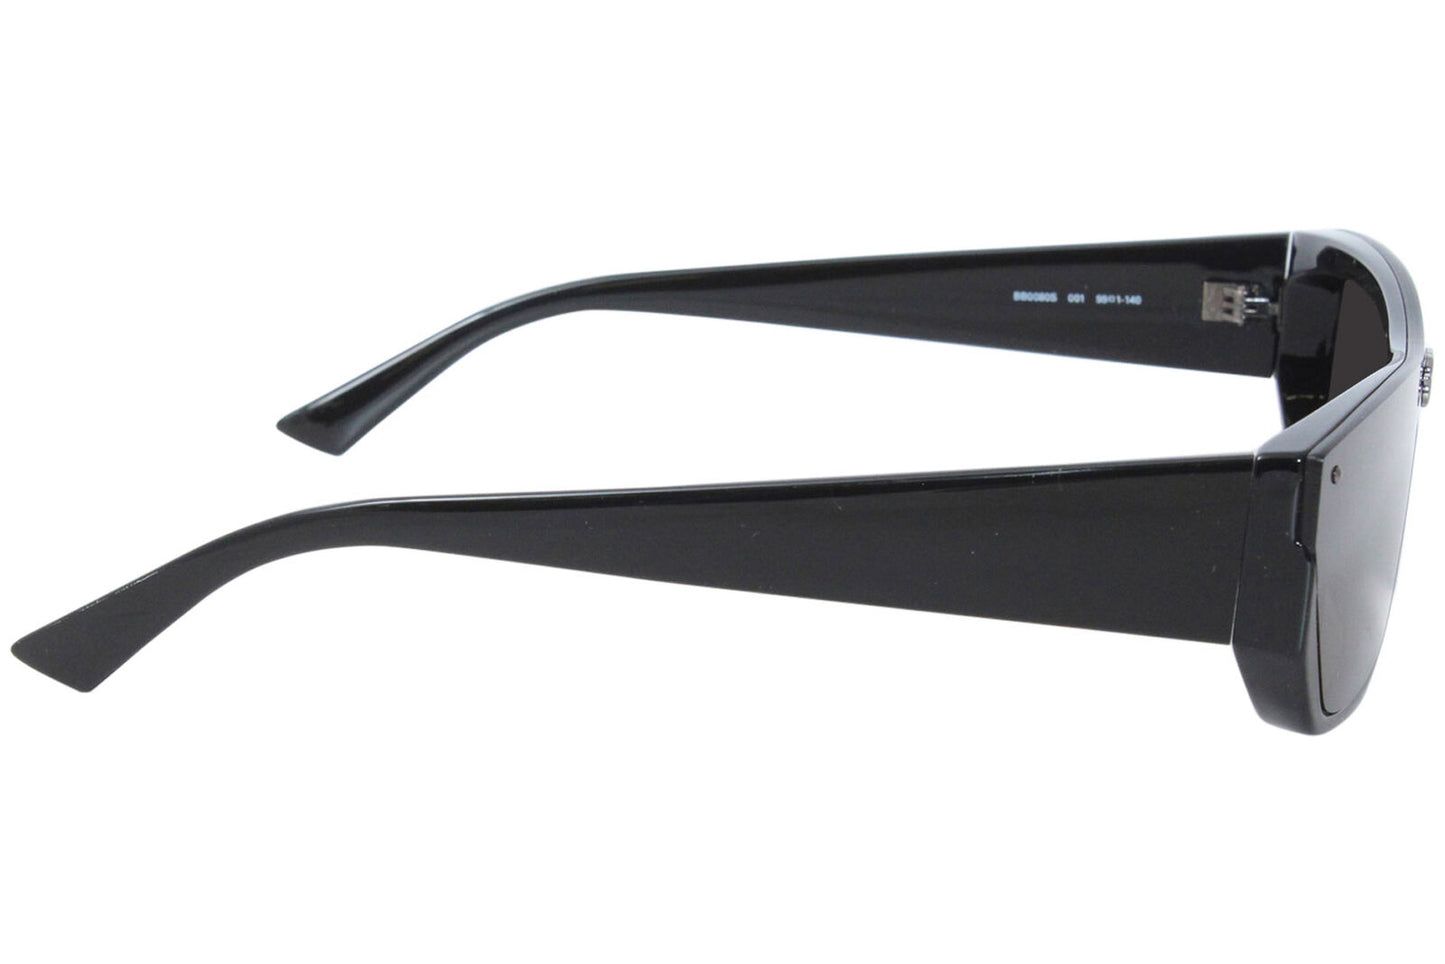 Balenciaga BB0080S-001 99mm New Sunglasses